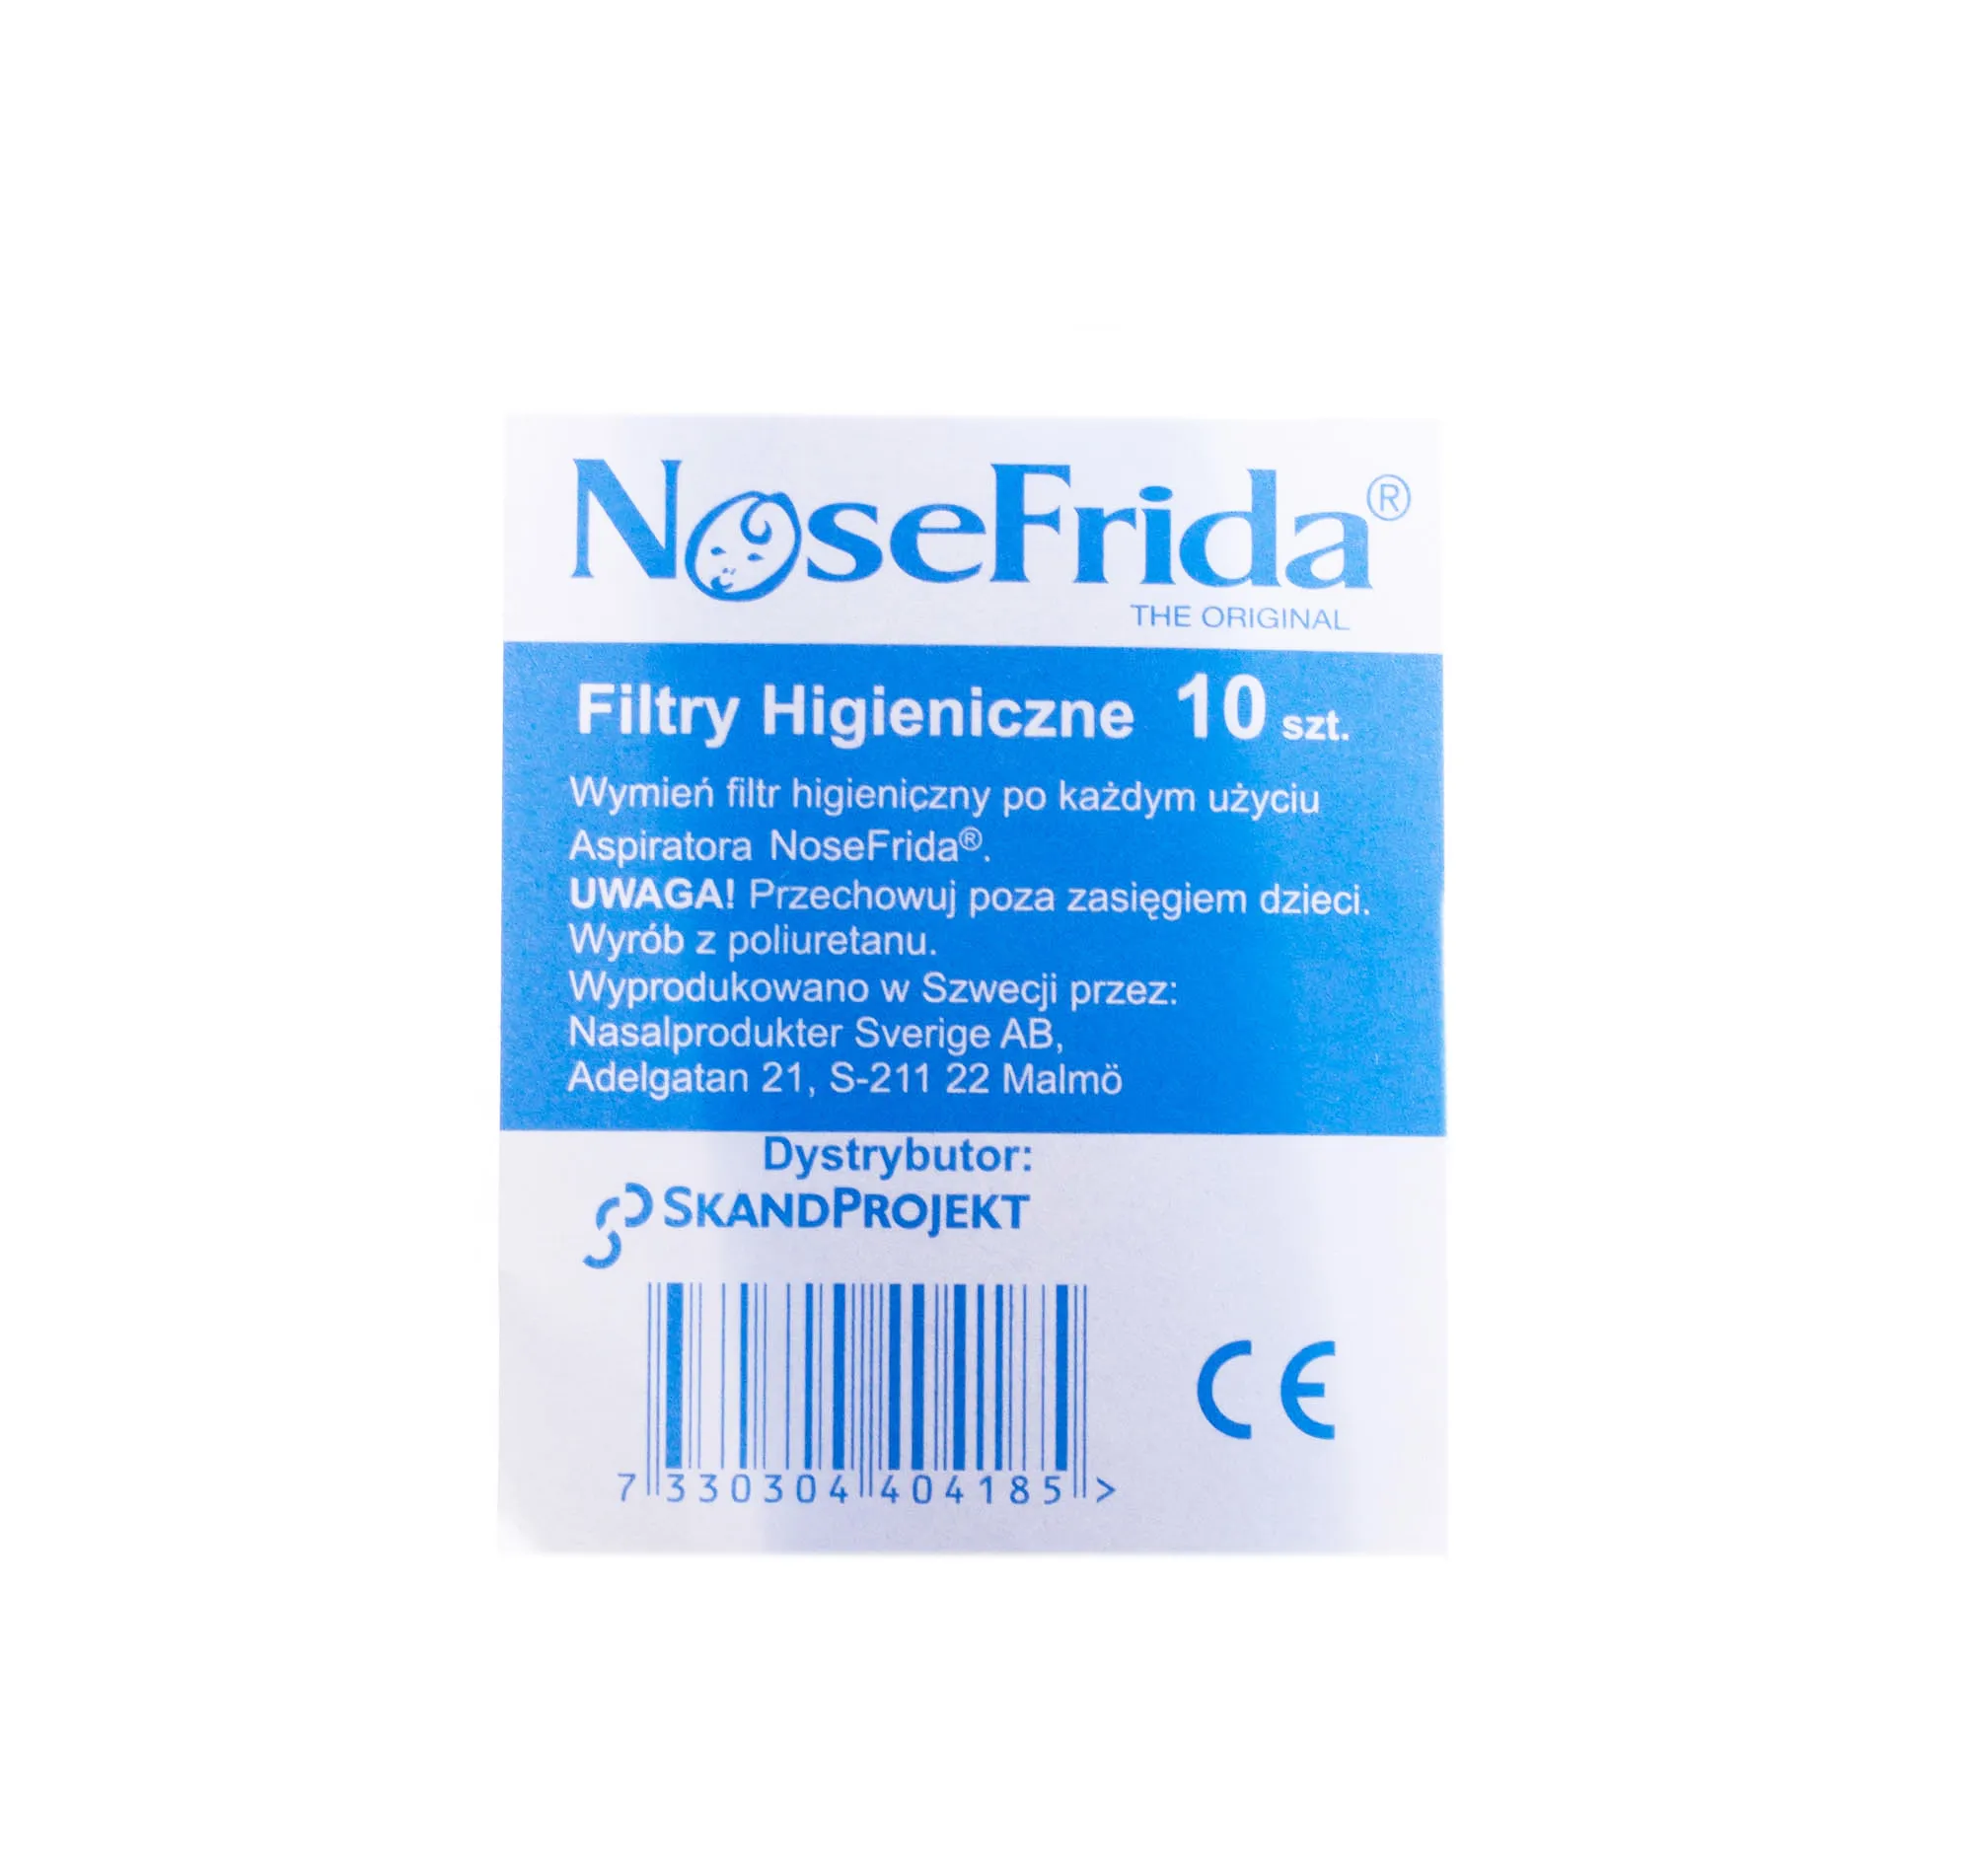 NoseFrida Filtry Higieniczne 10 szt. 